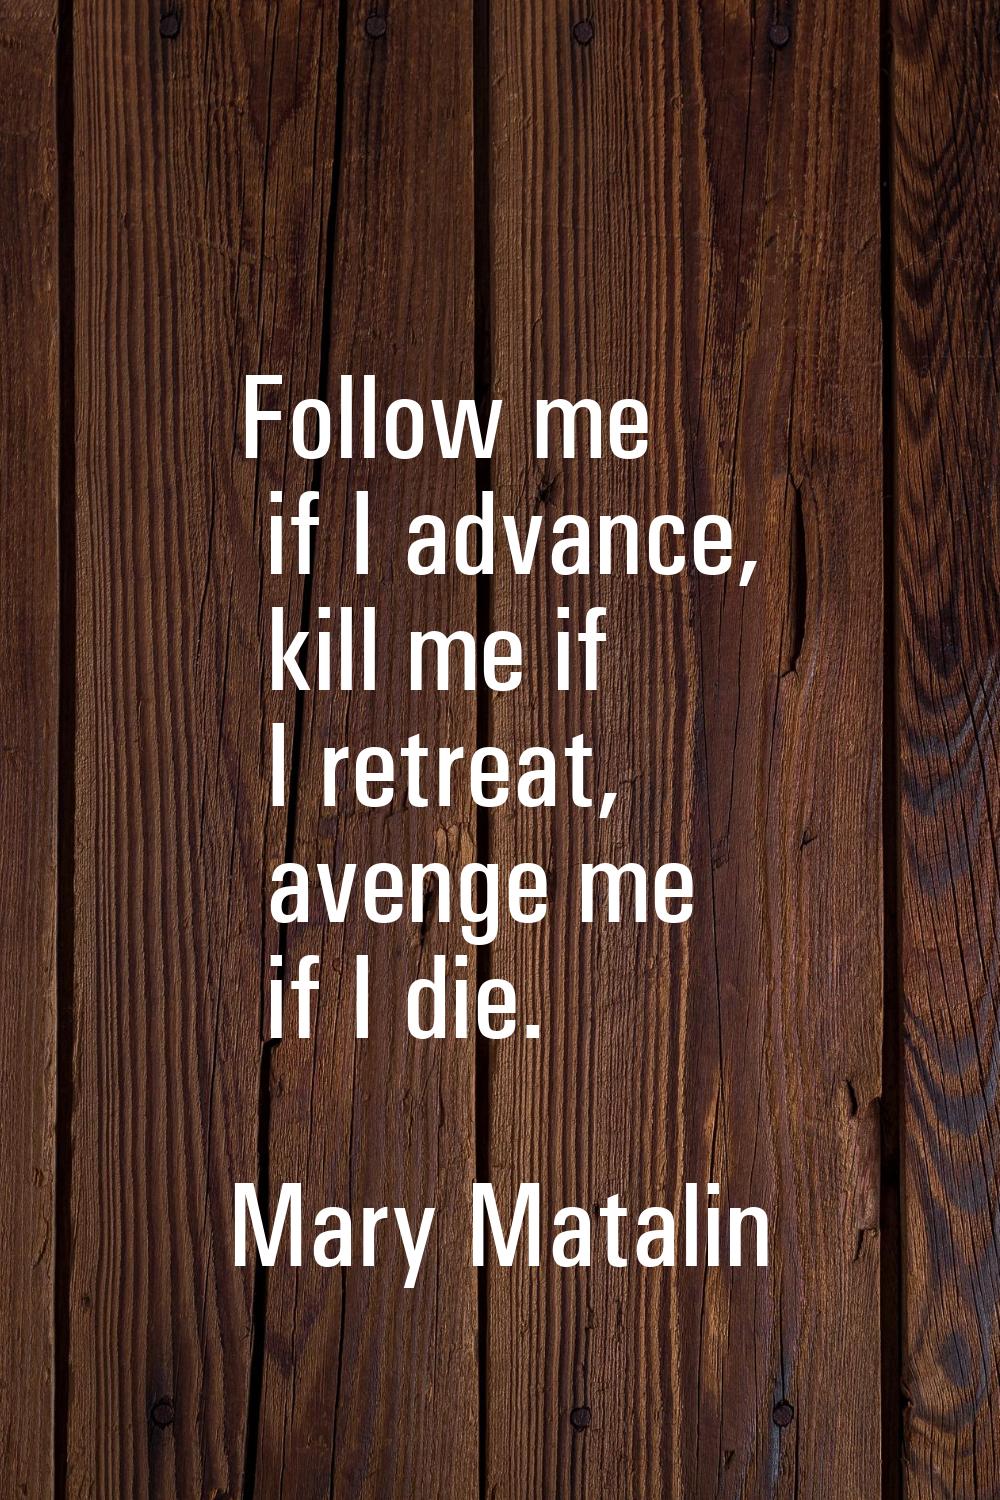 Follow me if I advance, kill me if I retreat, avenge me if I die.